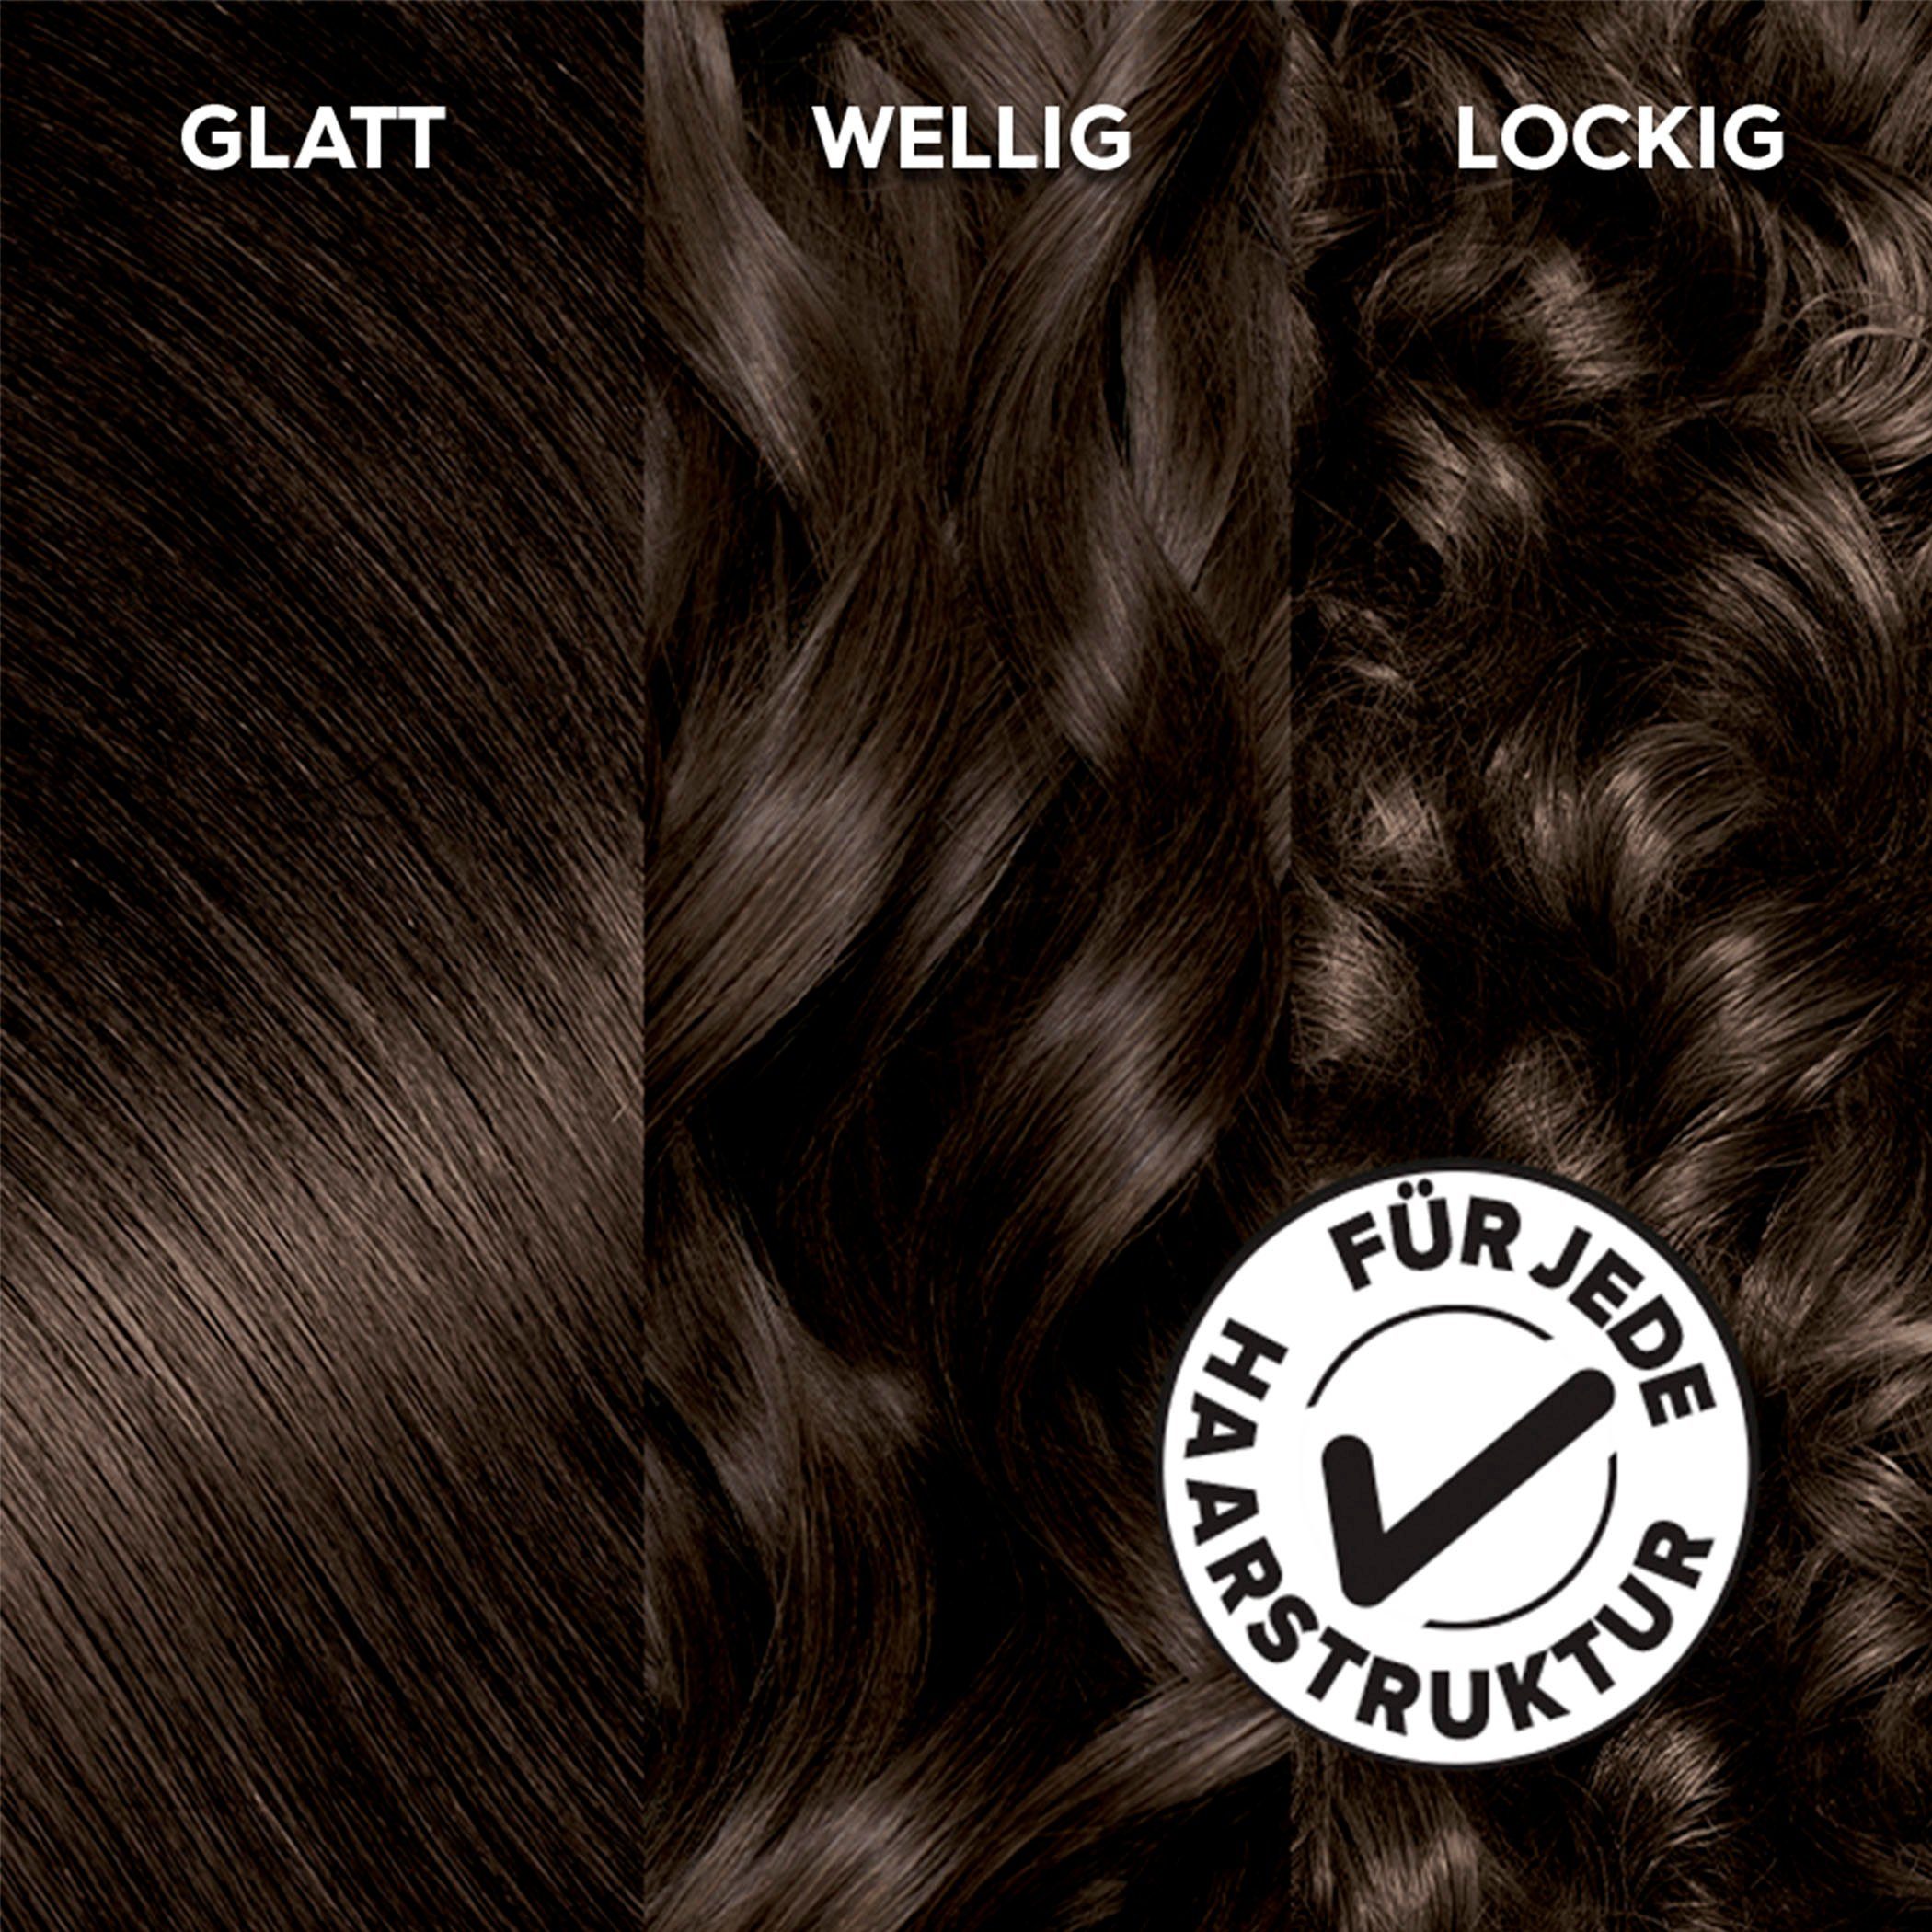 Garnier Set, GARNIER 3-tlg., Haarfarbe, dauerhafte Olia Ölbasis Coloration